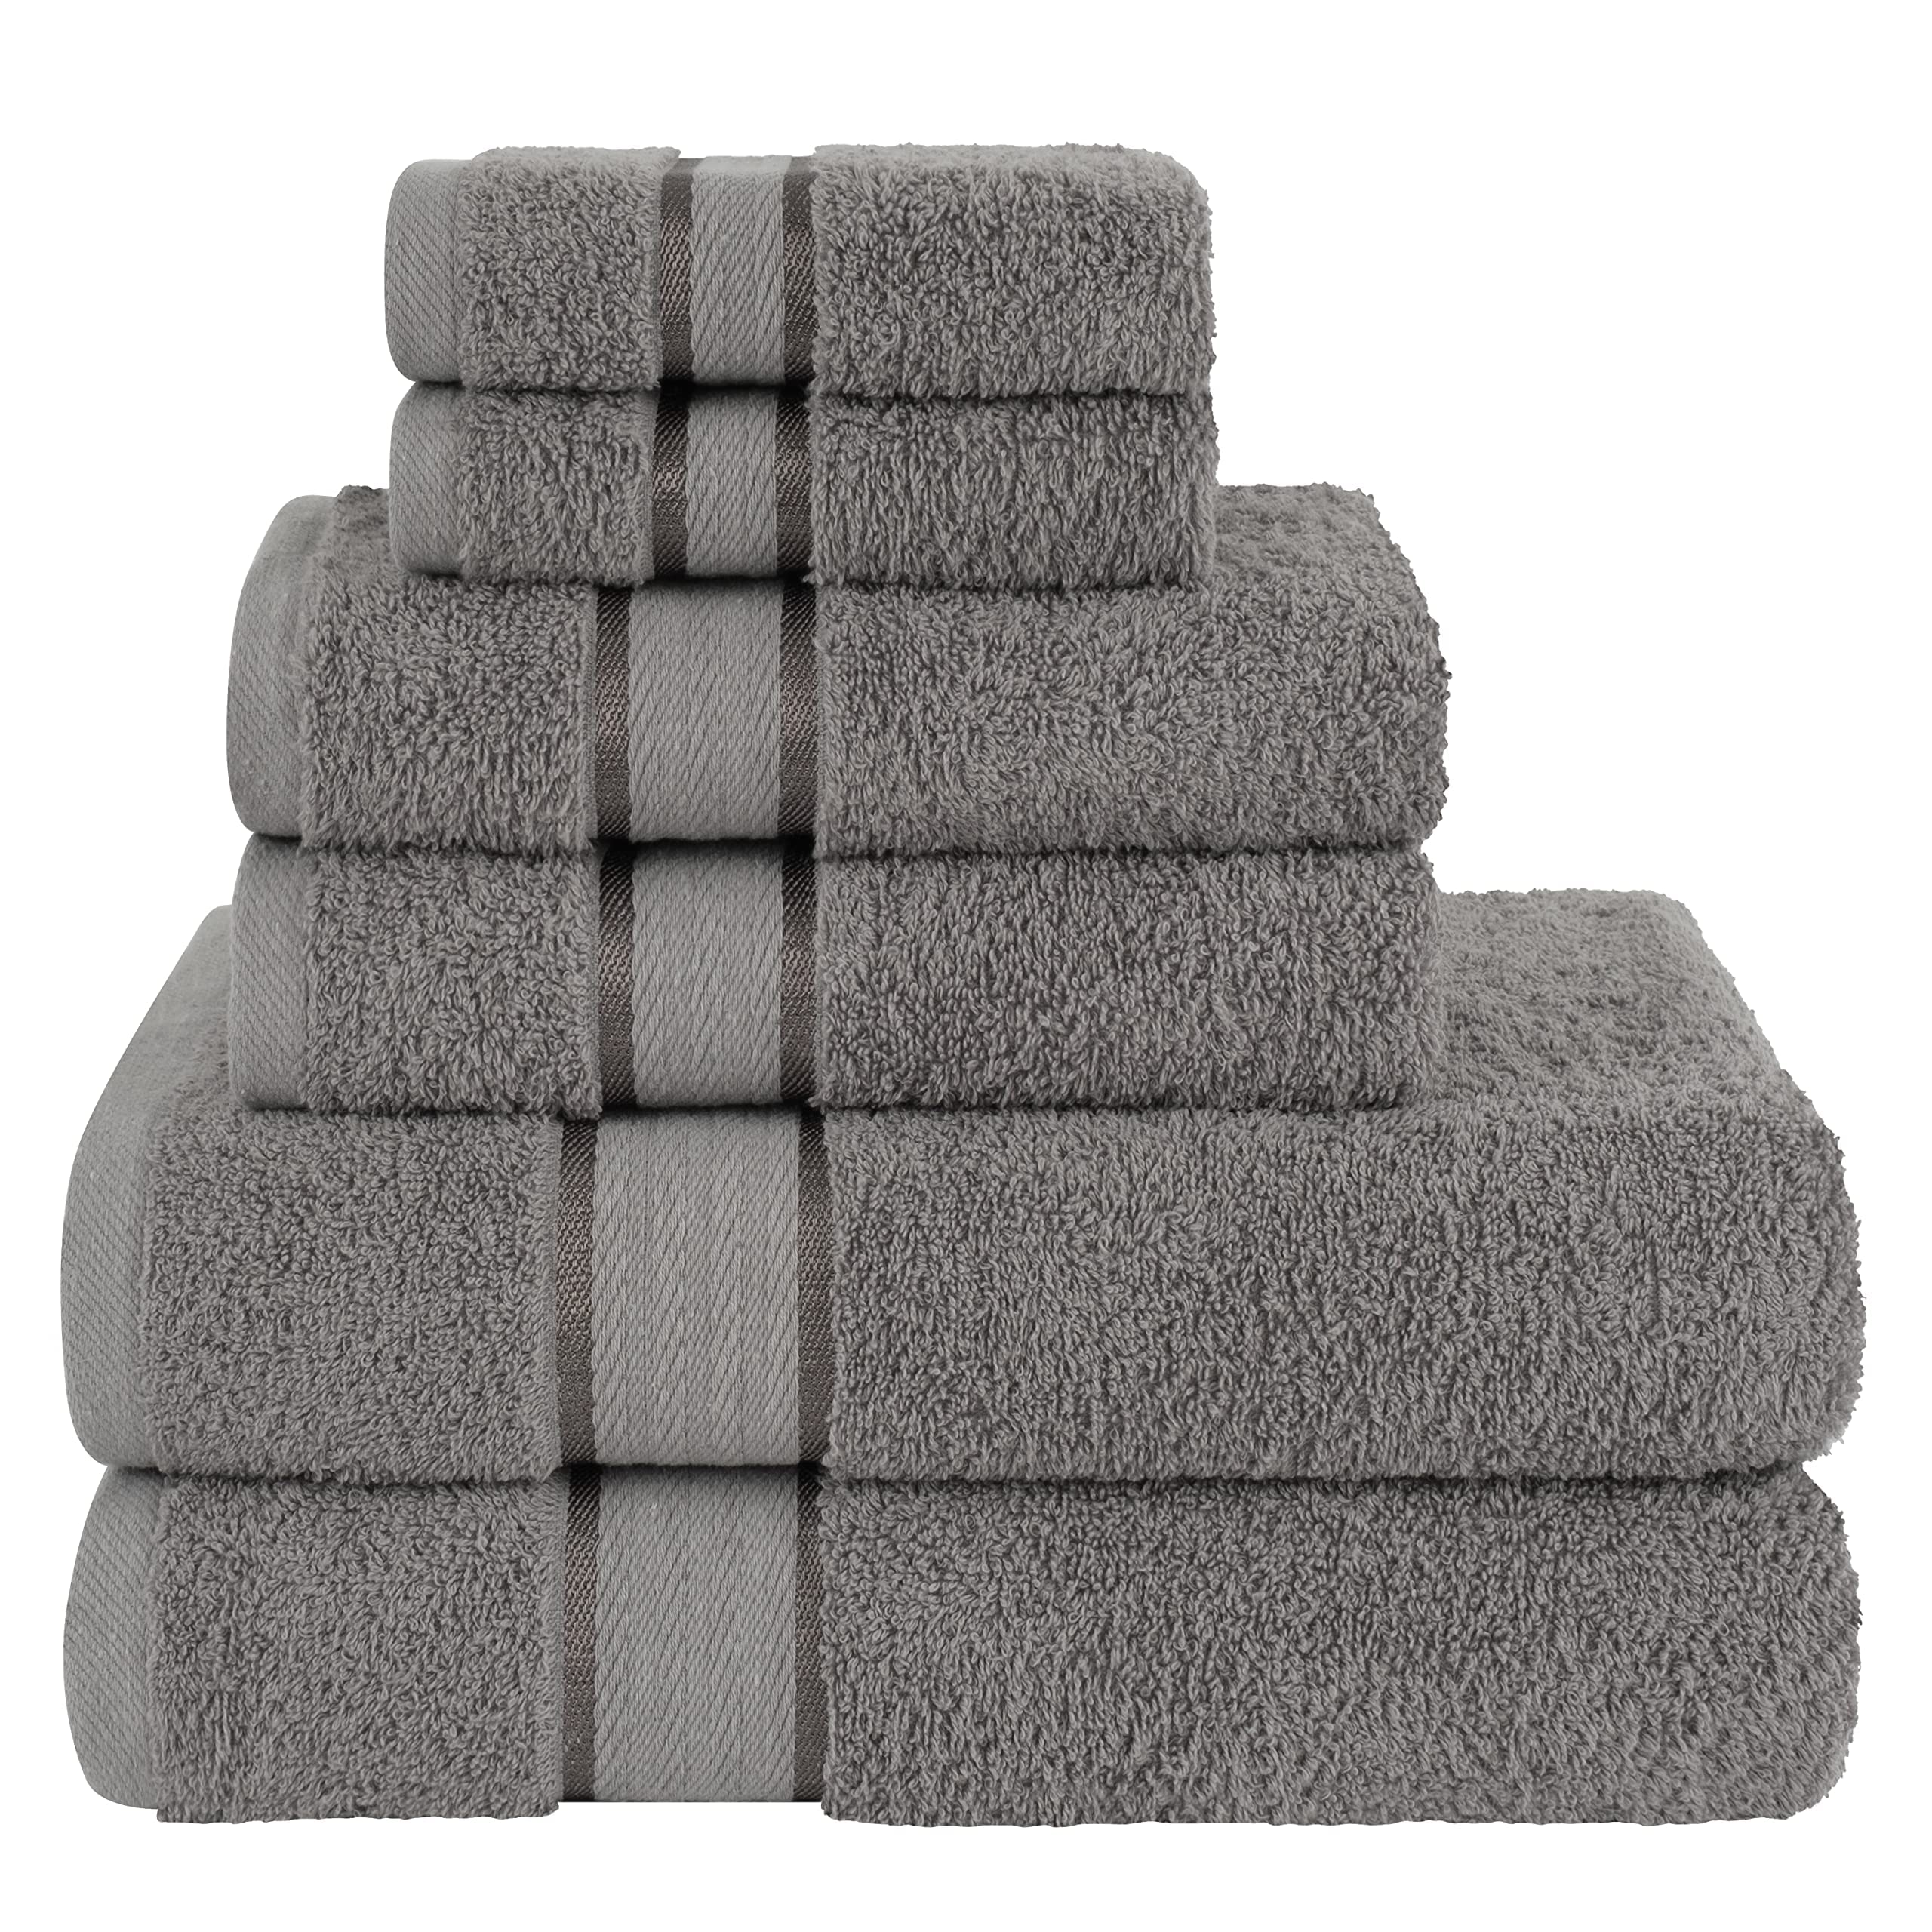 Dorlion Towels 6 Piece 100% Turkish Cotton Towel Set, 2 Bath Towels 2 Hand Towels 2 Washcloths, Soft Absorbent Towels for Bathro